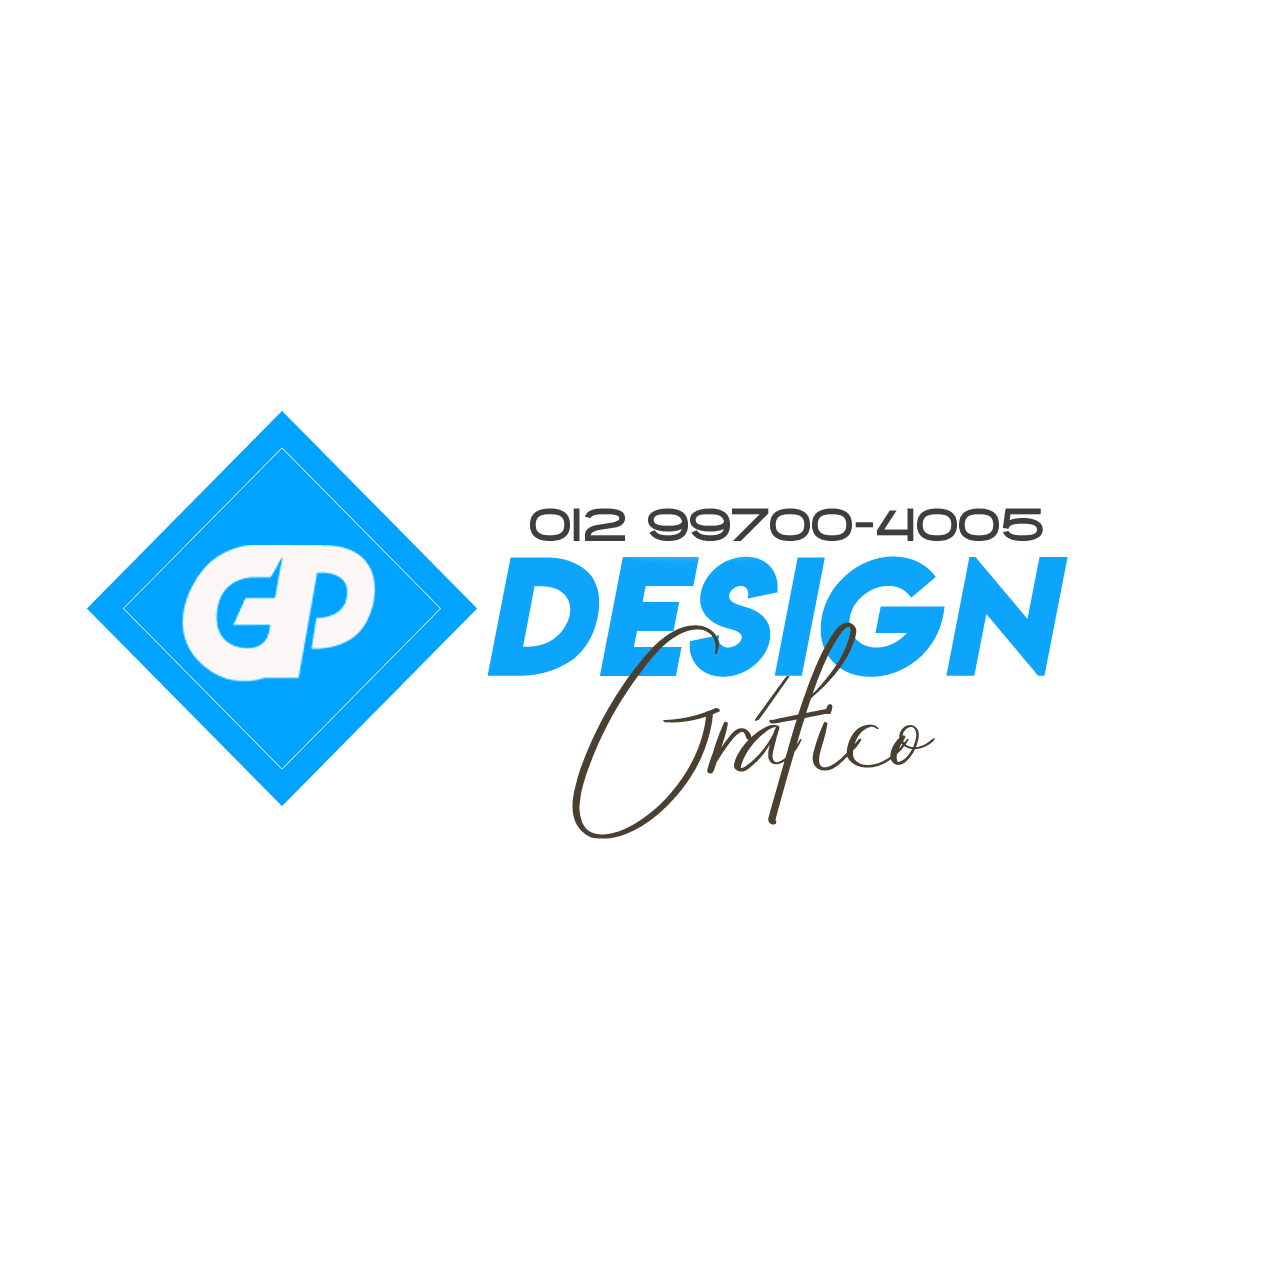 GP Design